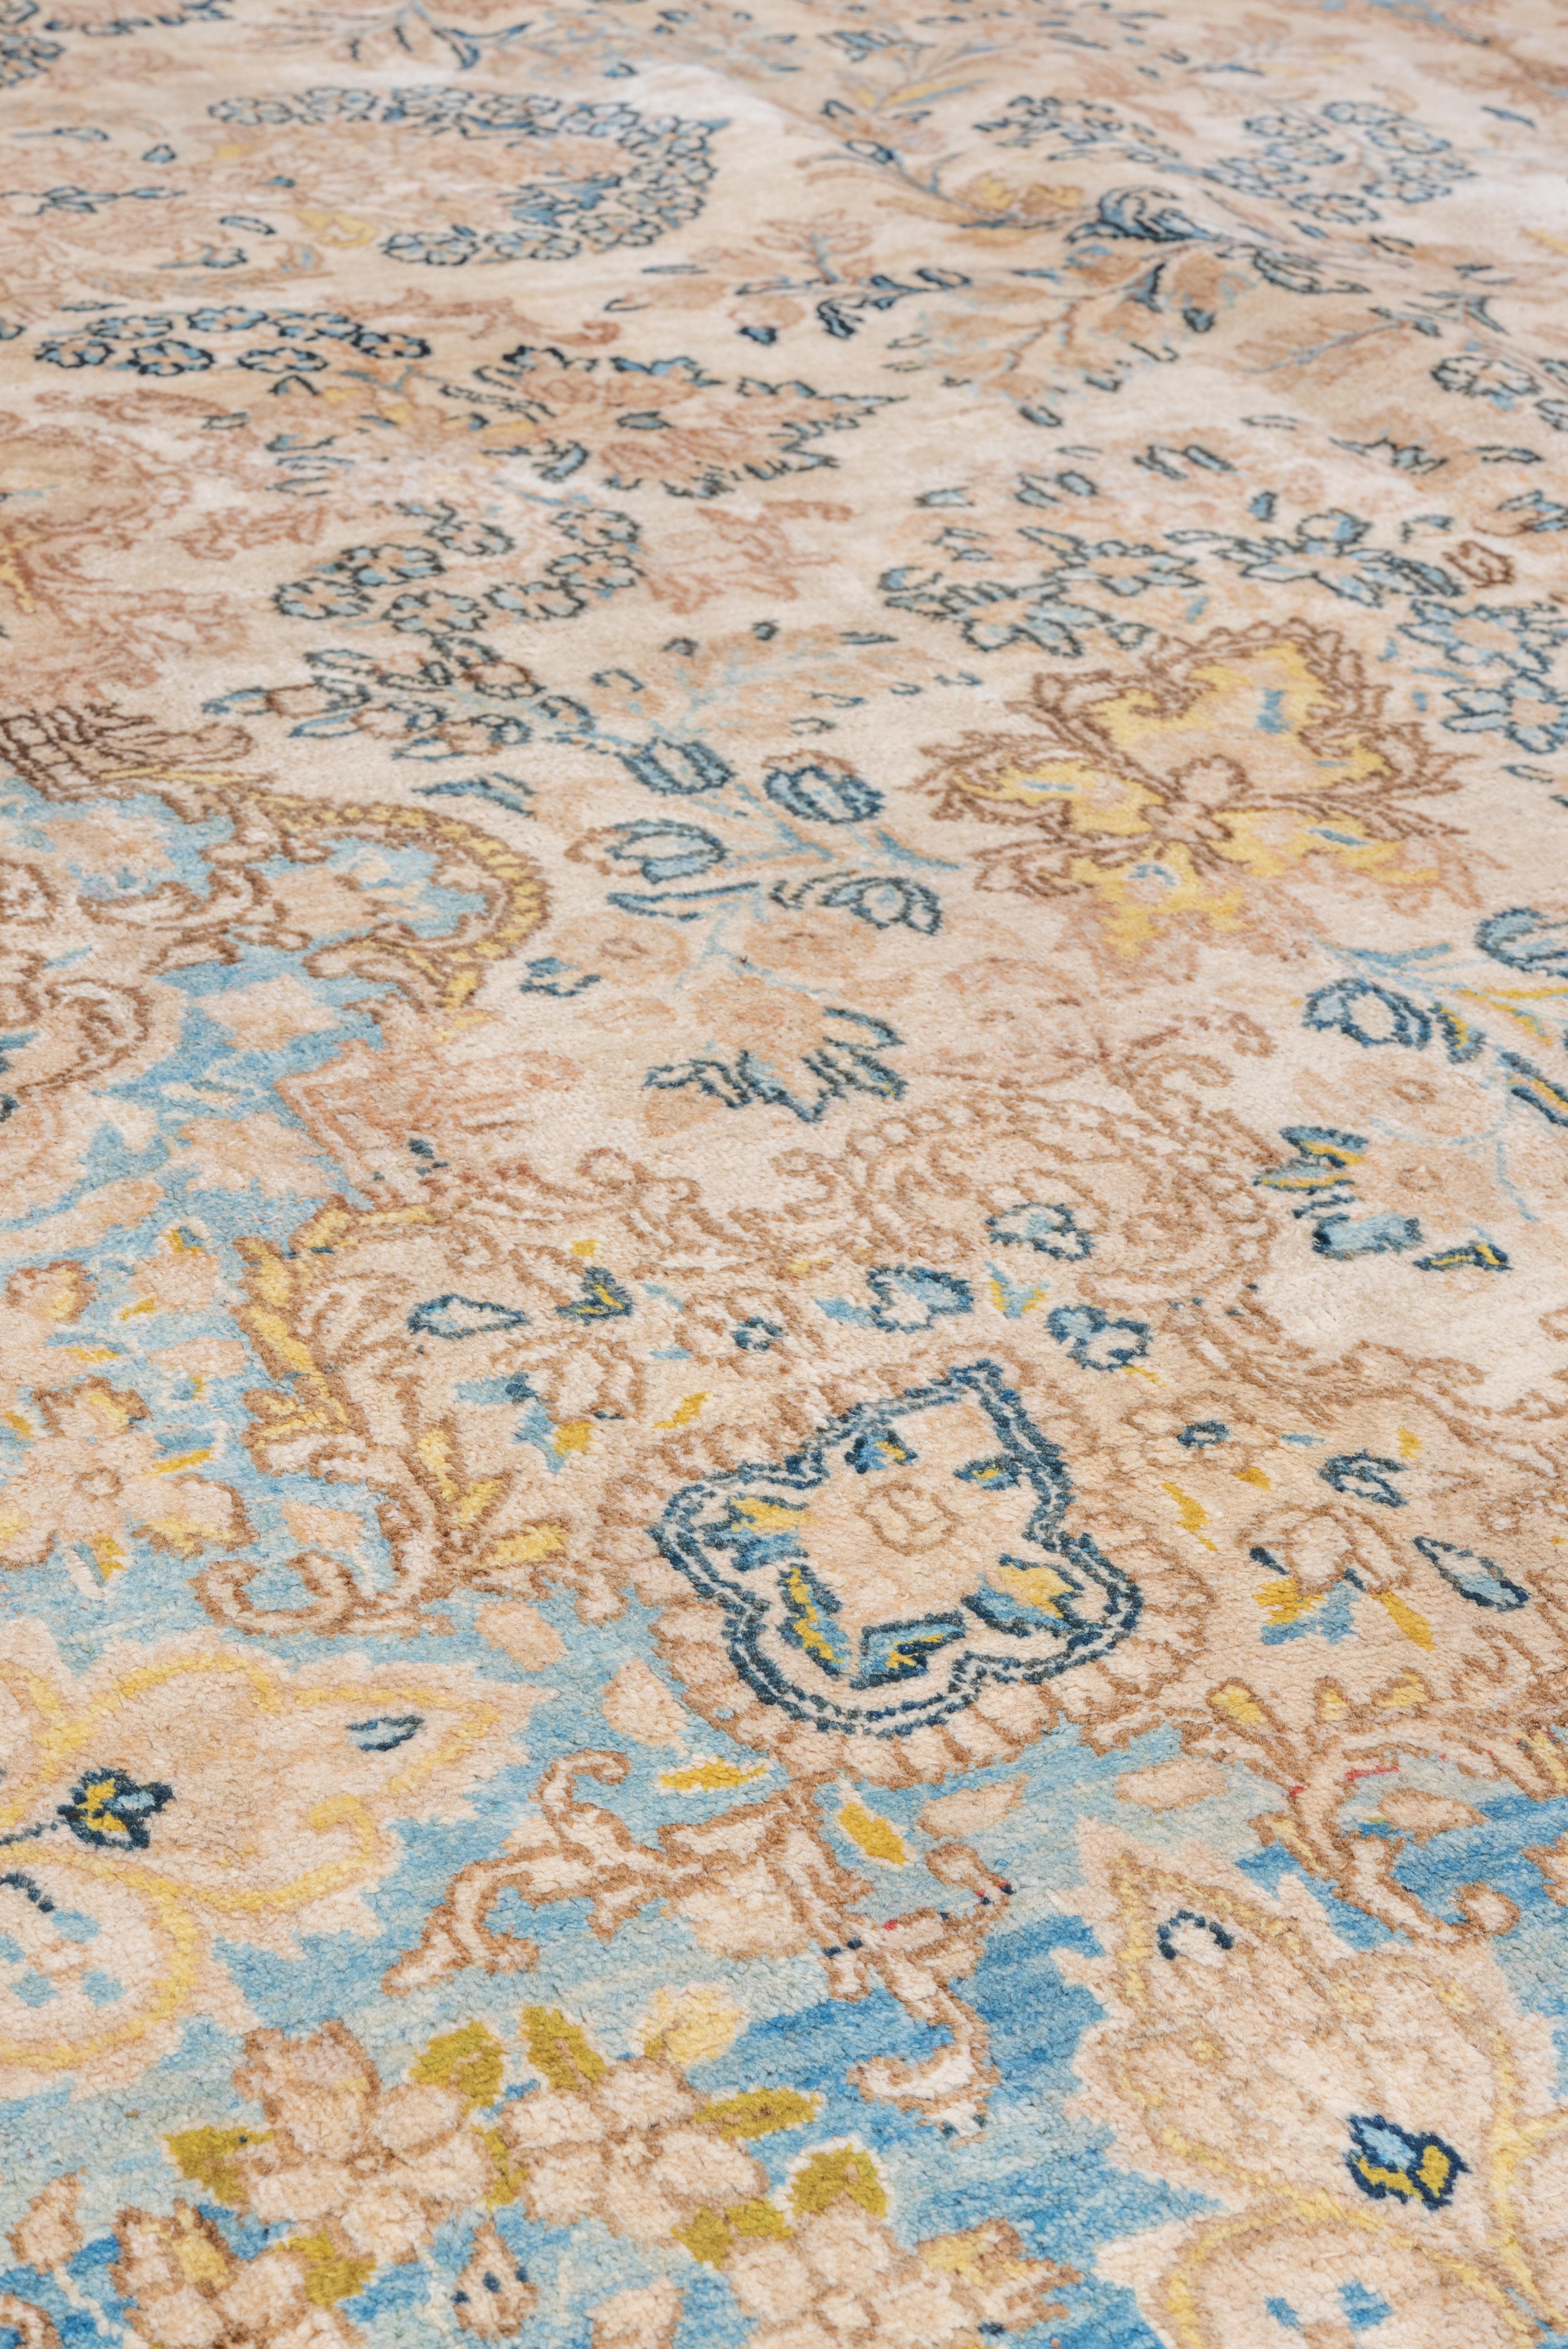 Kirman Antique Neutral Persian Kerman Carpet with Light Blue & Yellows Tones